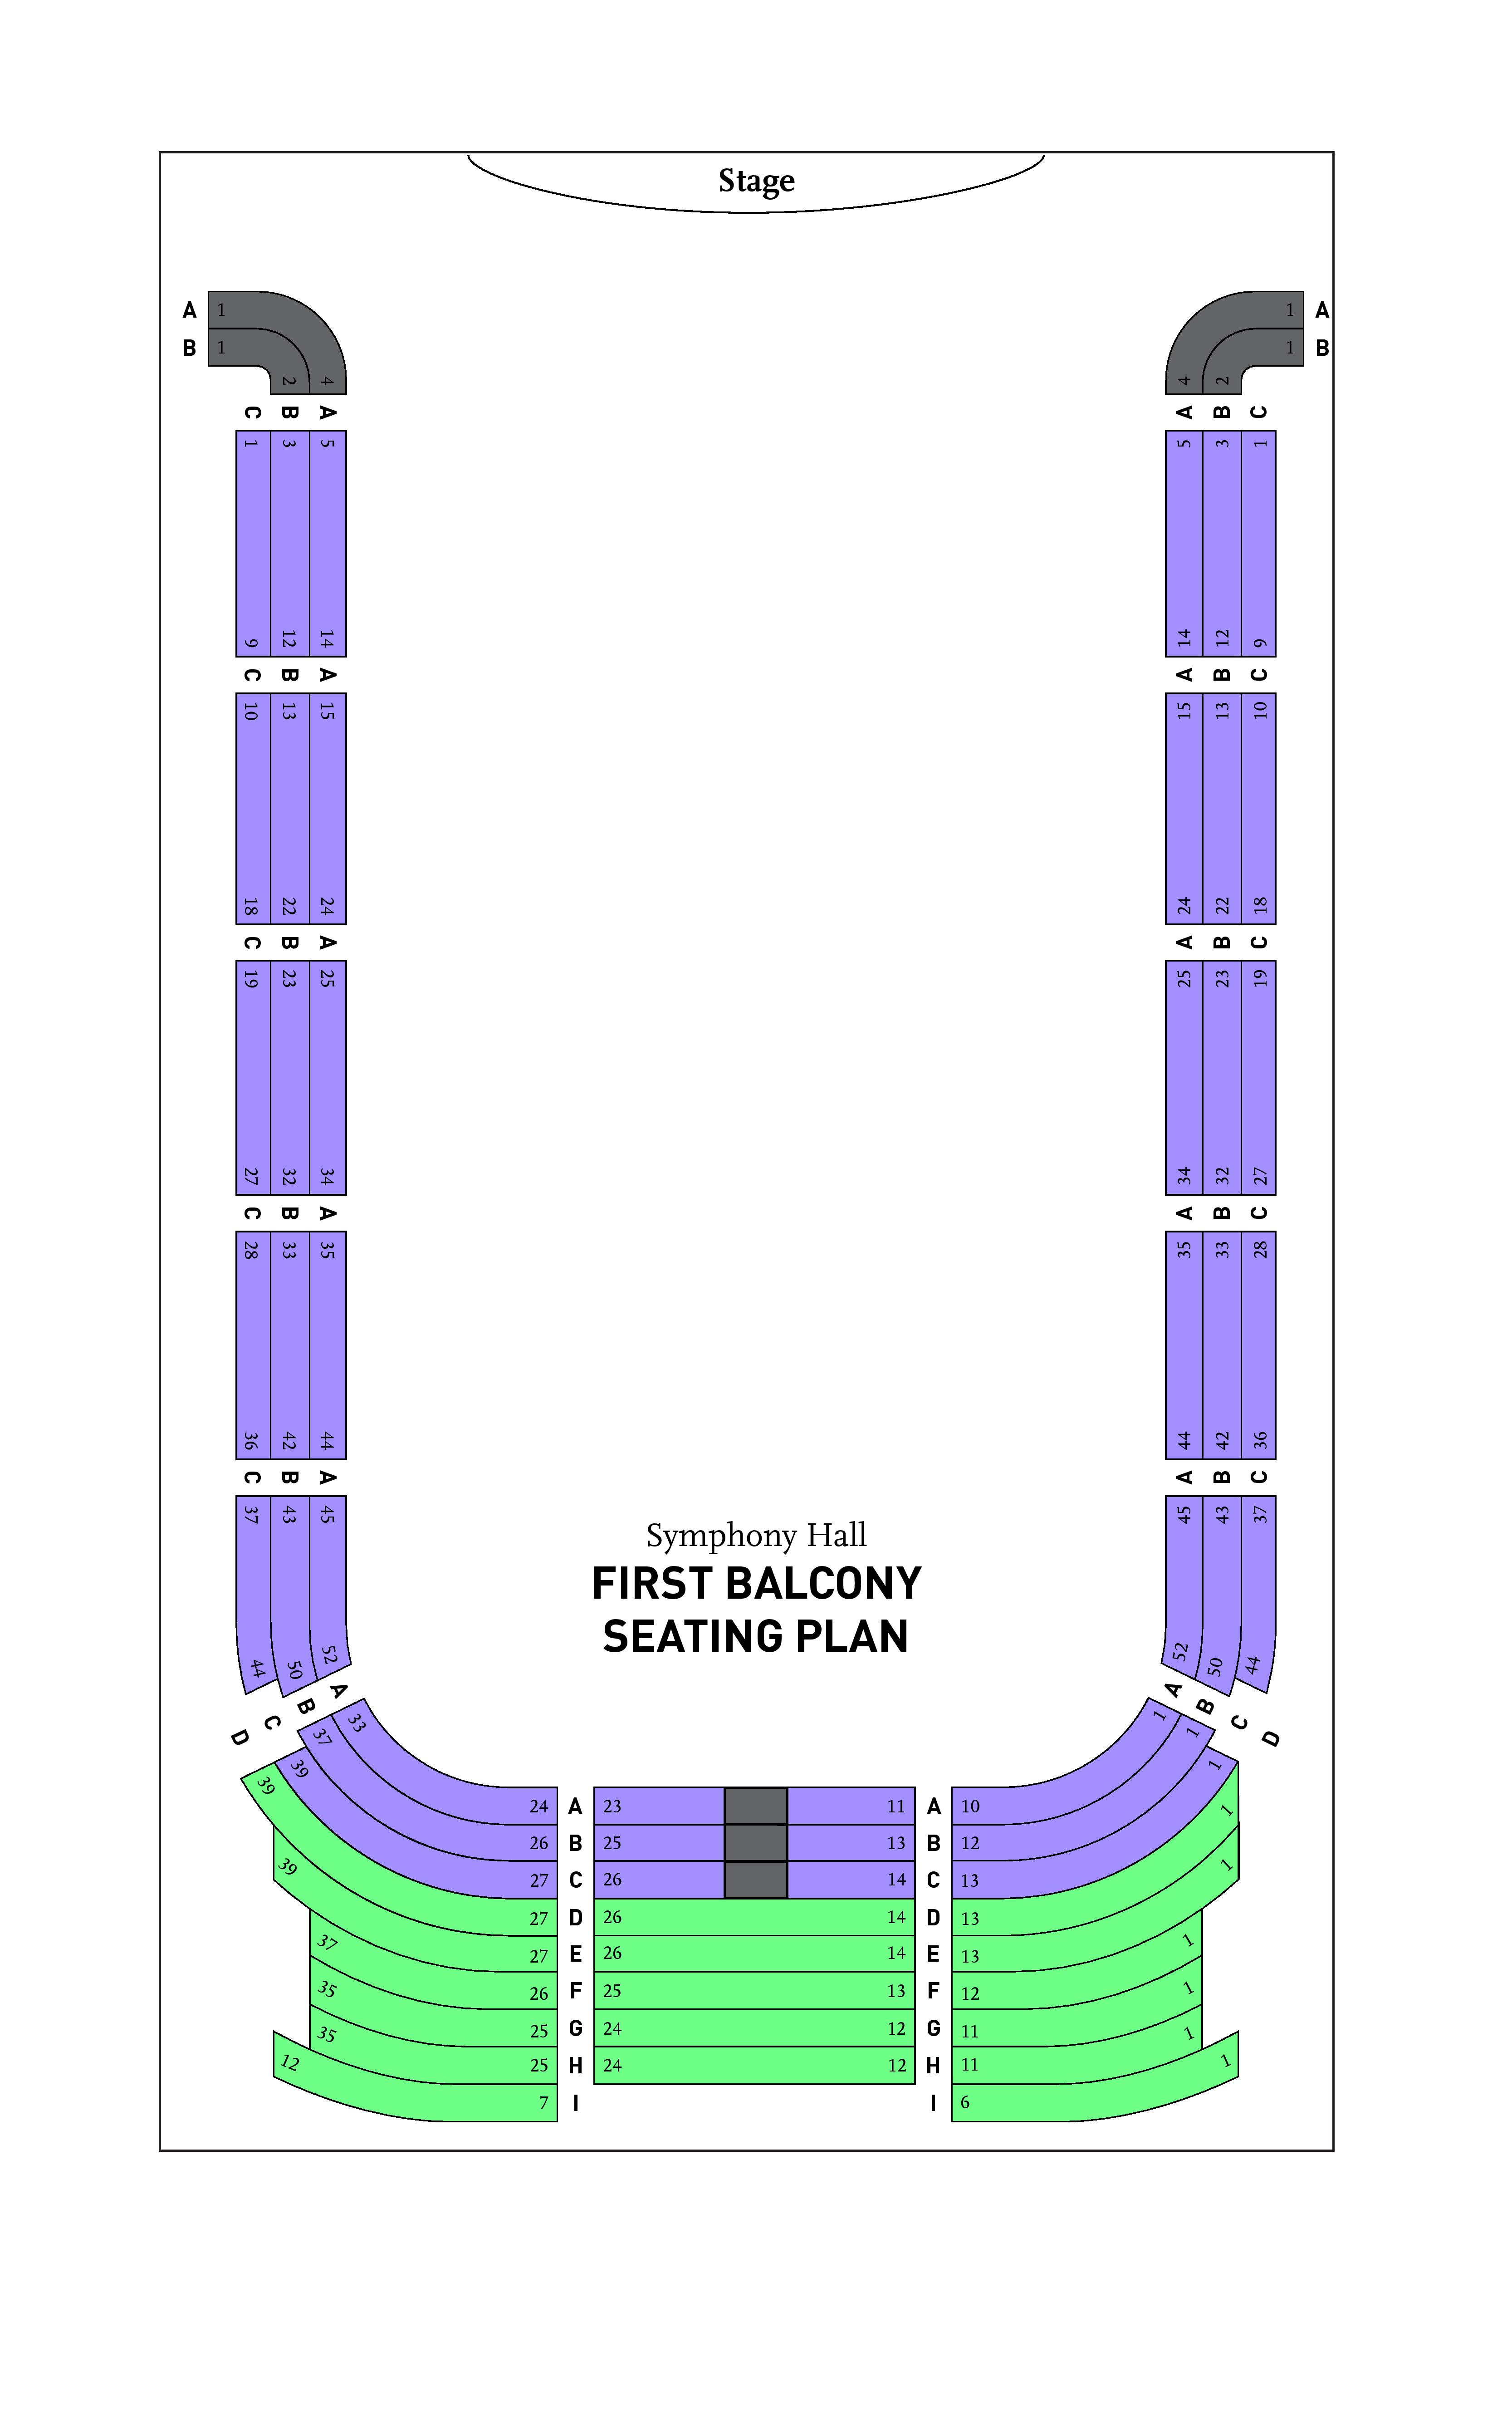 Boston Symphony Hall Seating Chart